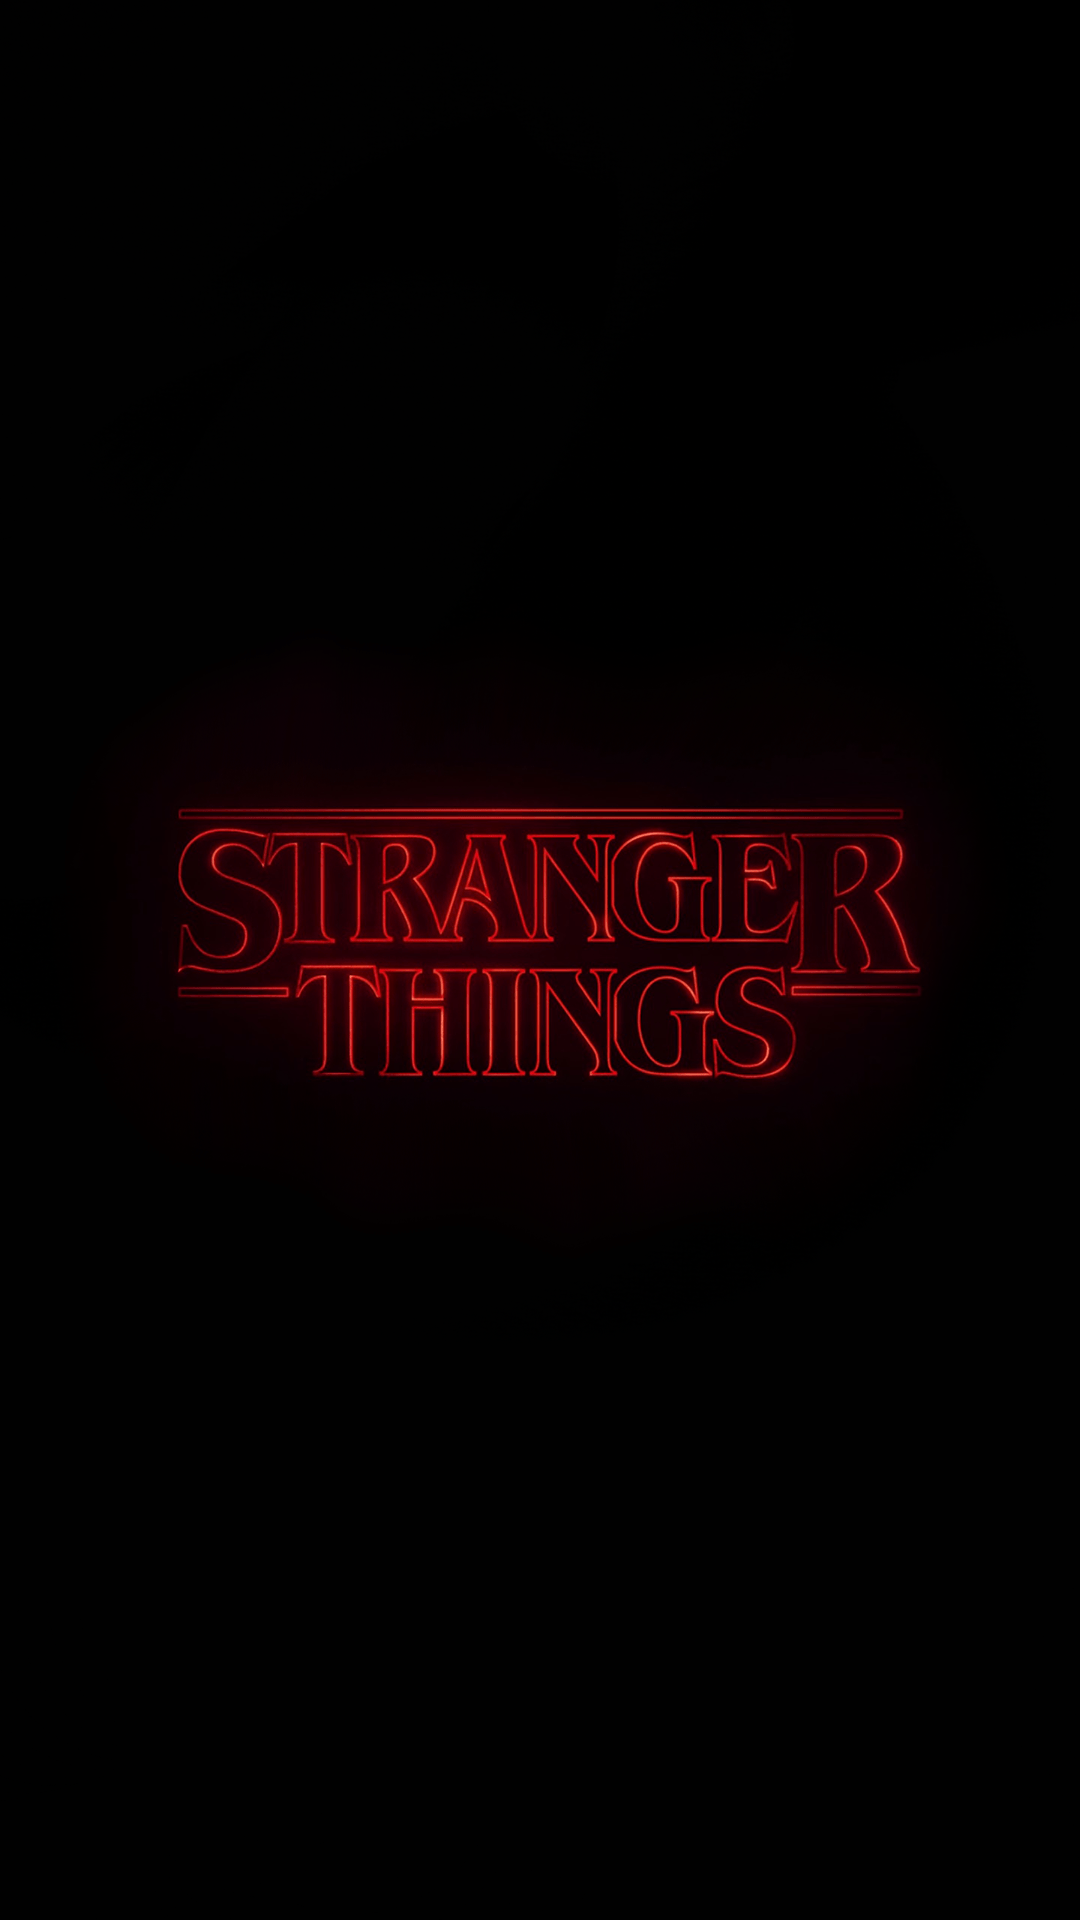 92+] Stranger Things Wallpapers - WallpaperSafari